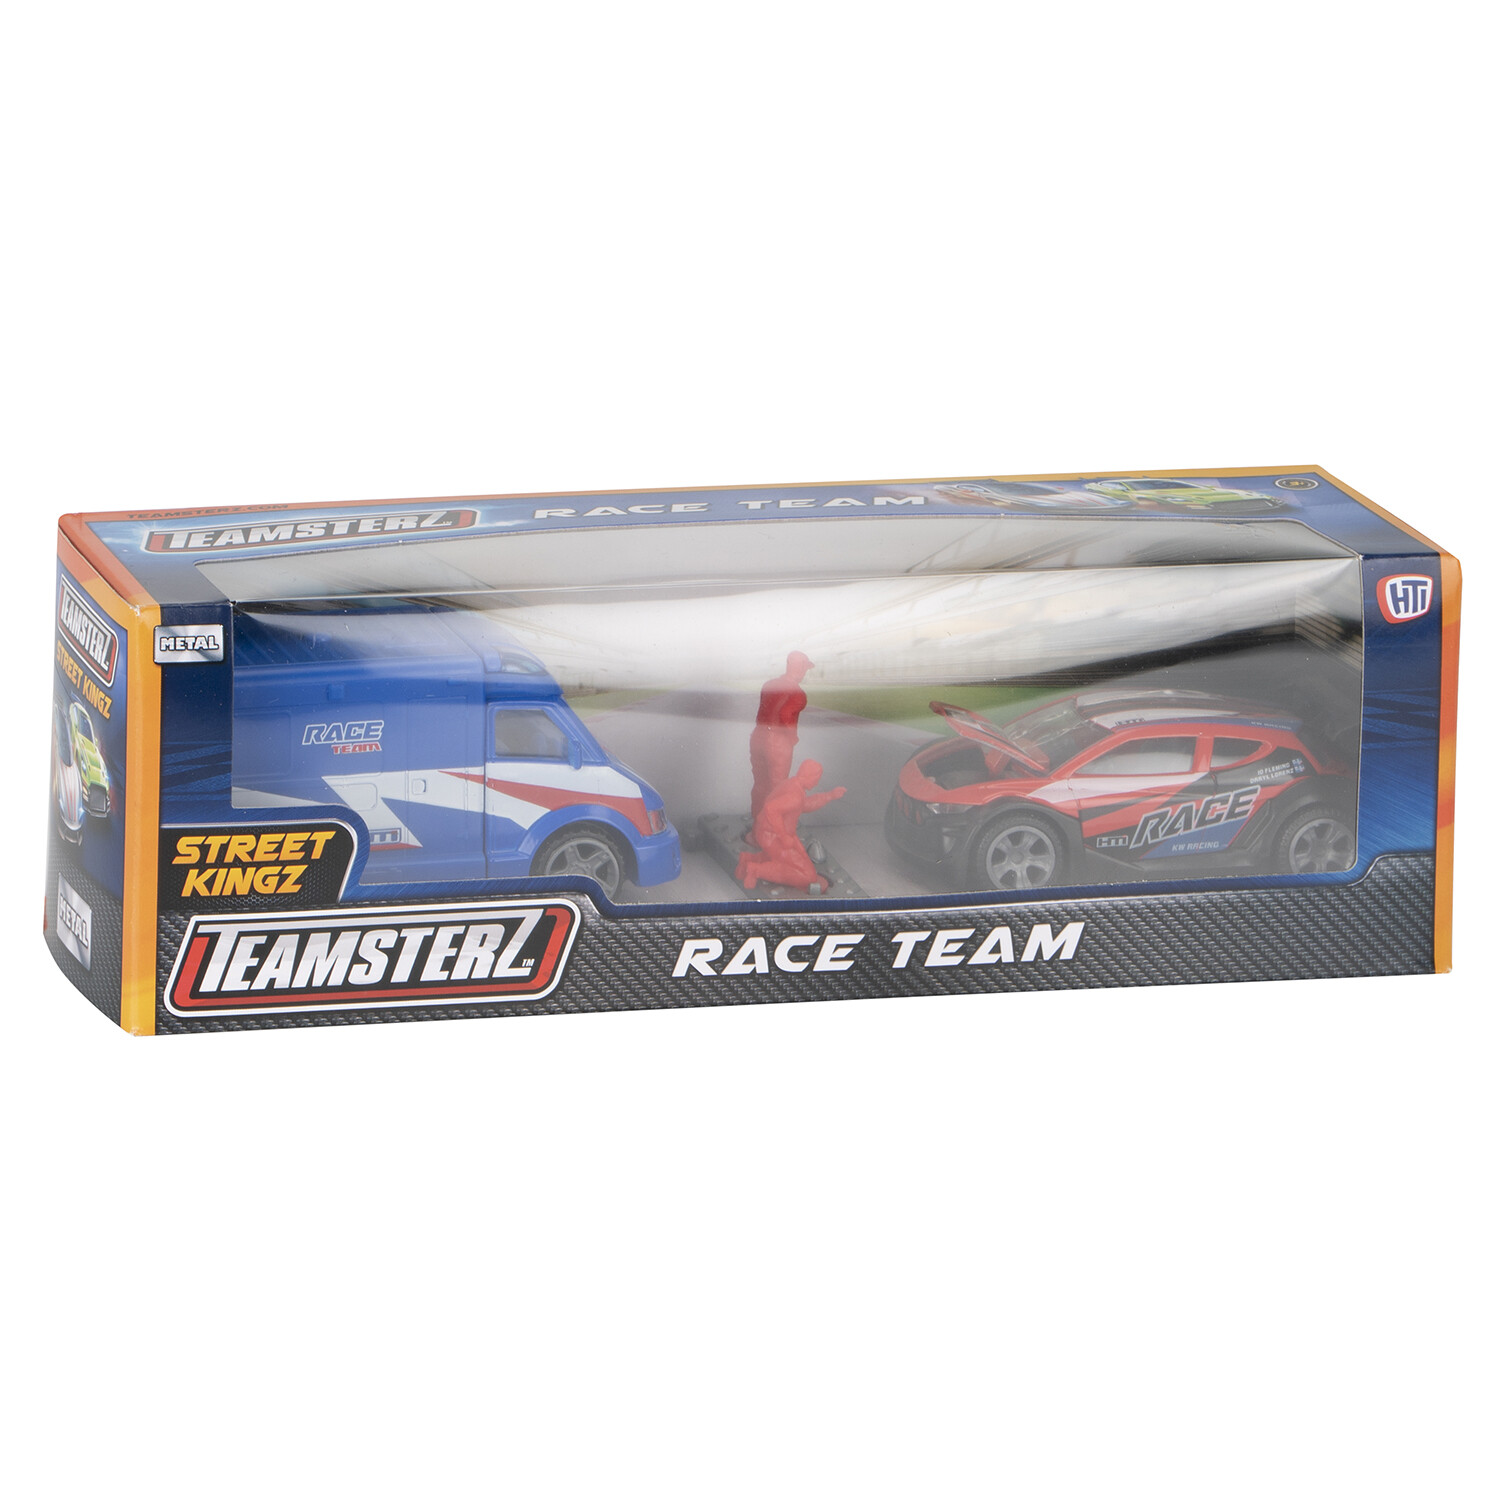 Single Teamsterz Street Kingz Race Team Playset in Asssorted styles Image 2